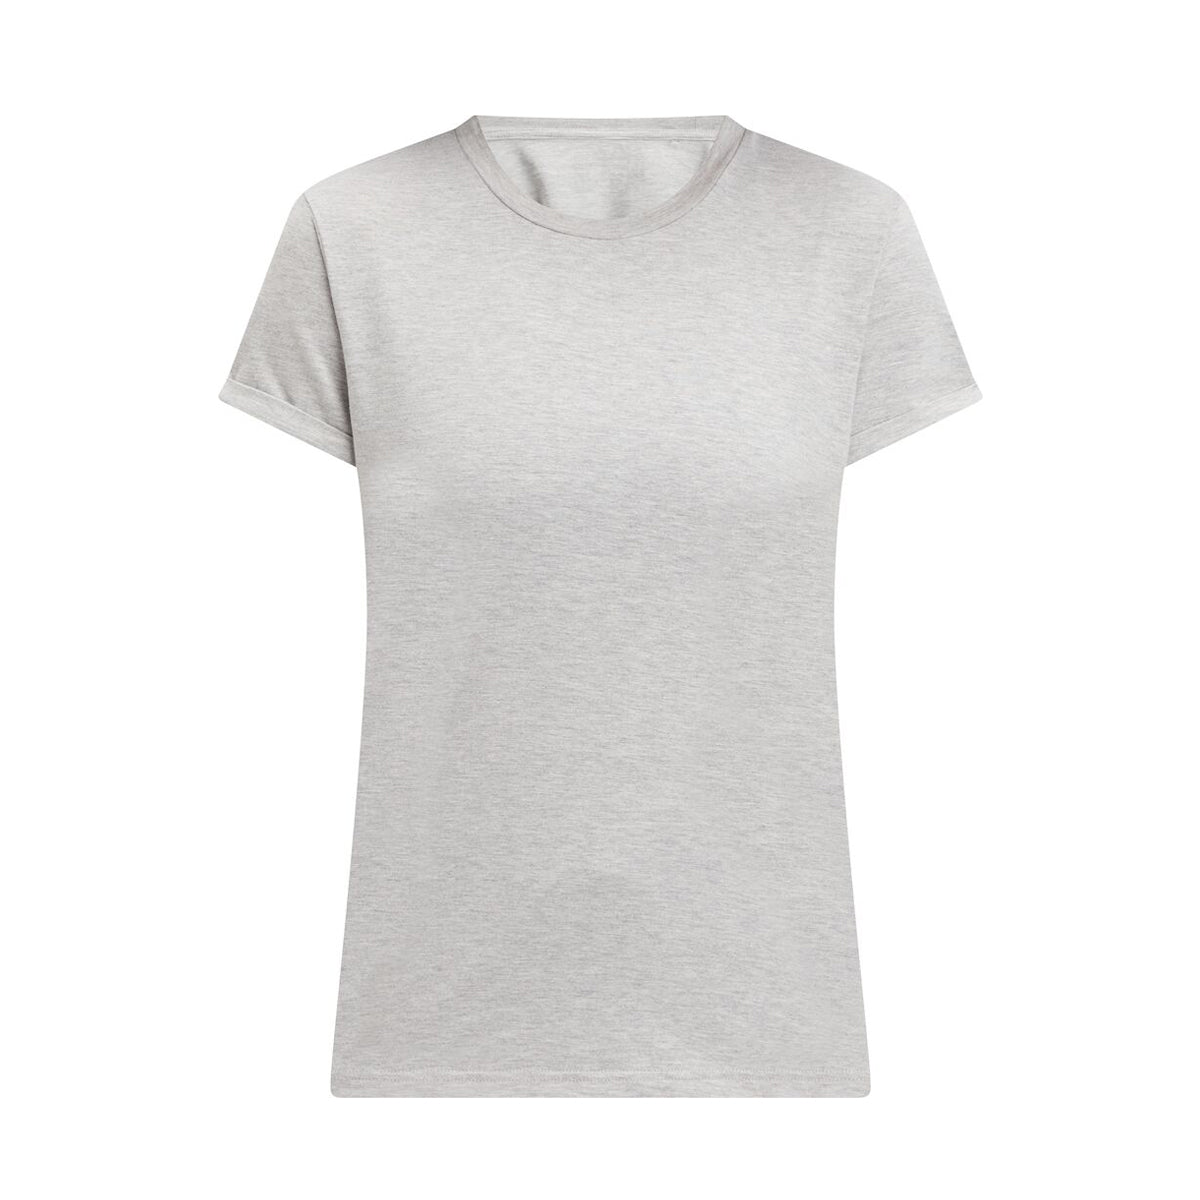 Energetics Java Lifestyle T-Shirt For Women, Grey